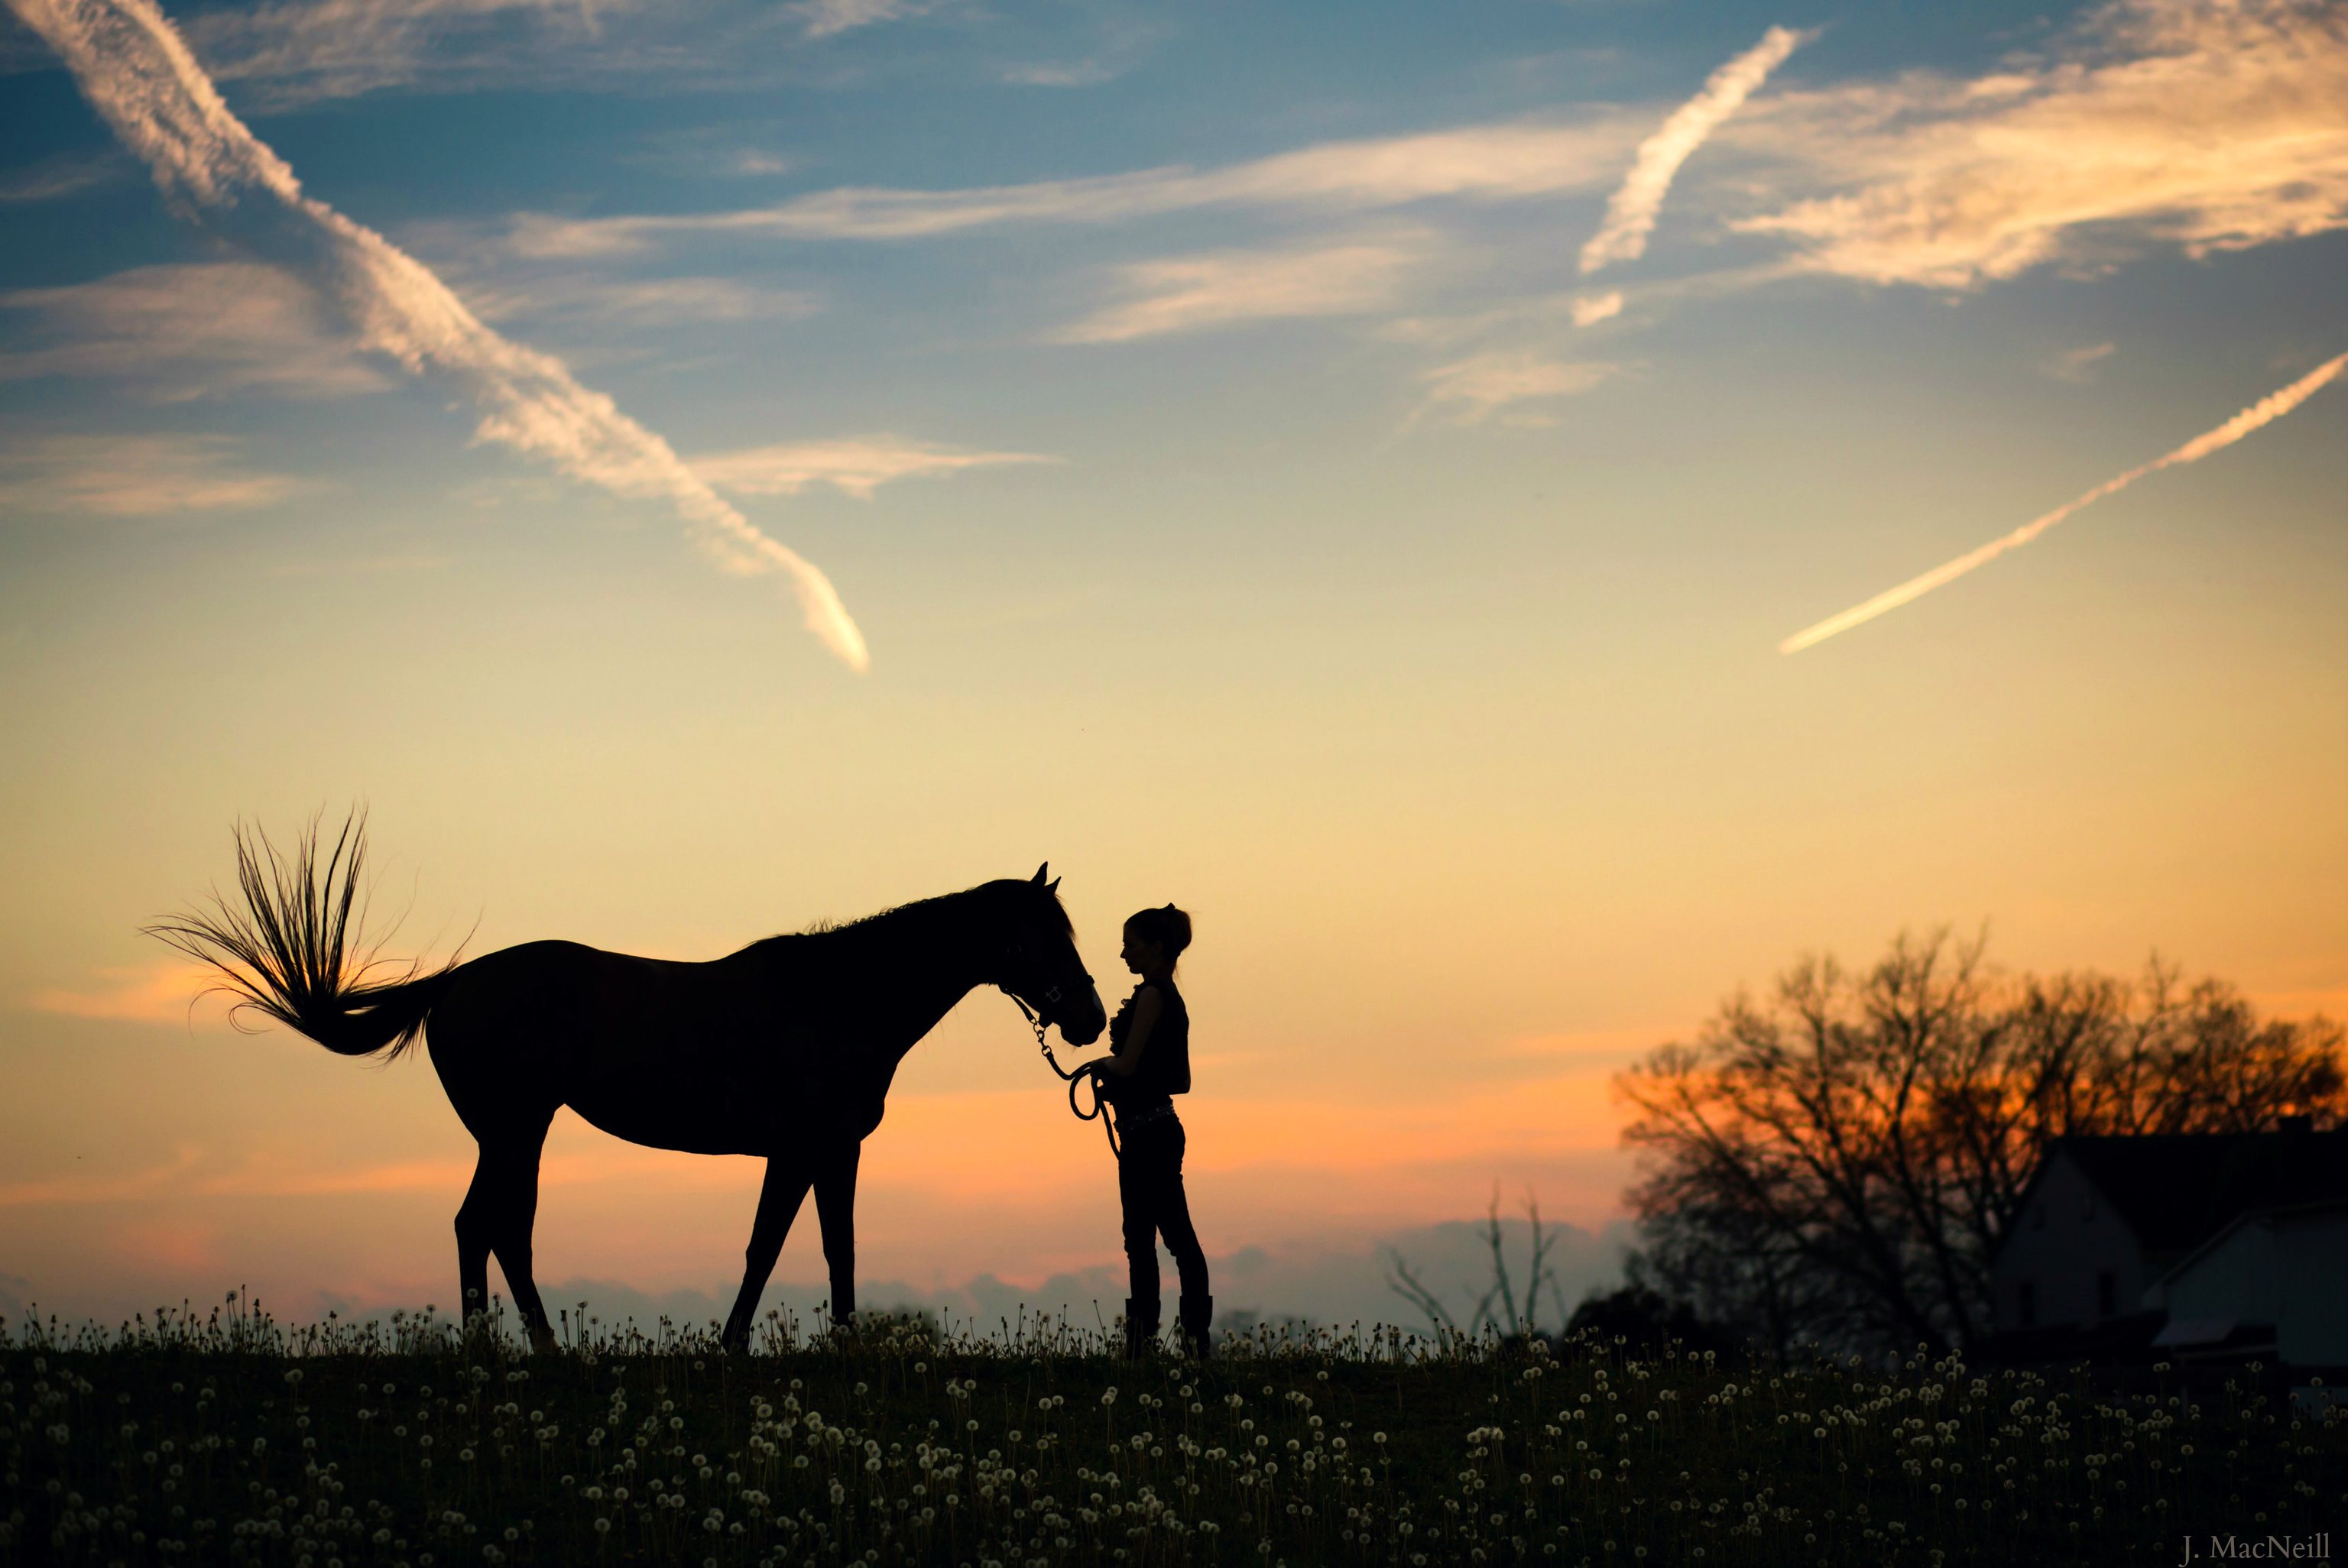 General 3072x2052 horse nature sunset pasture women women outdoors silhouette